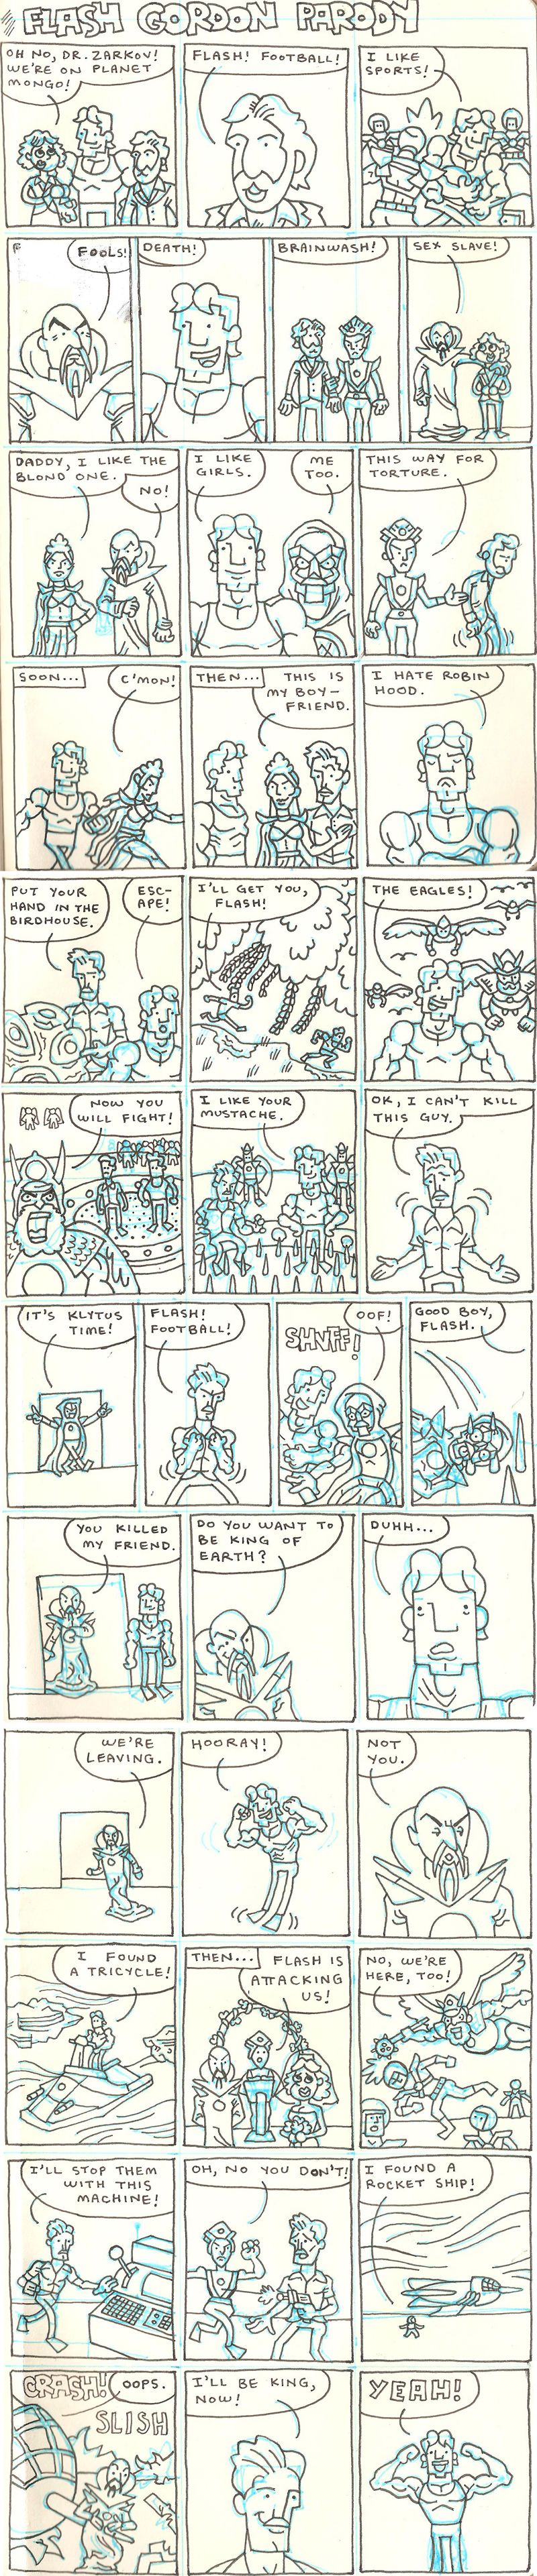 flash gordon parody comics #1